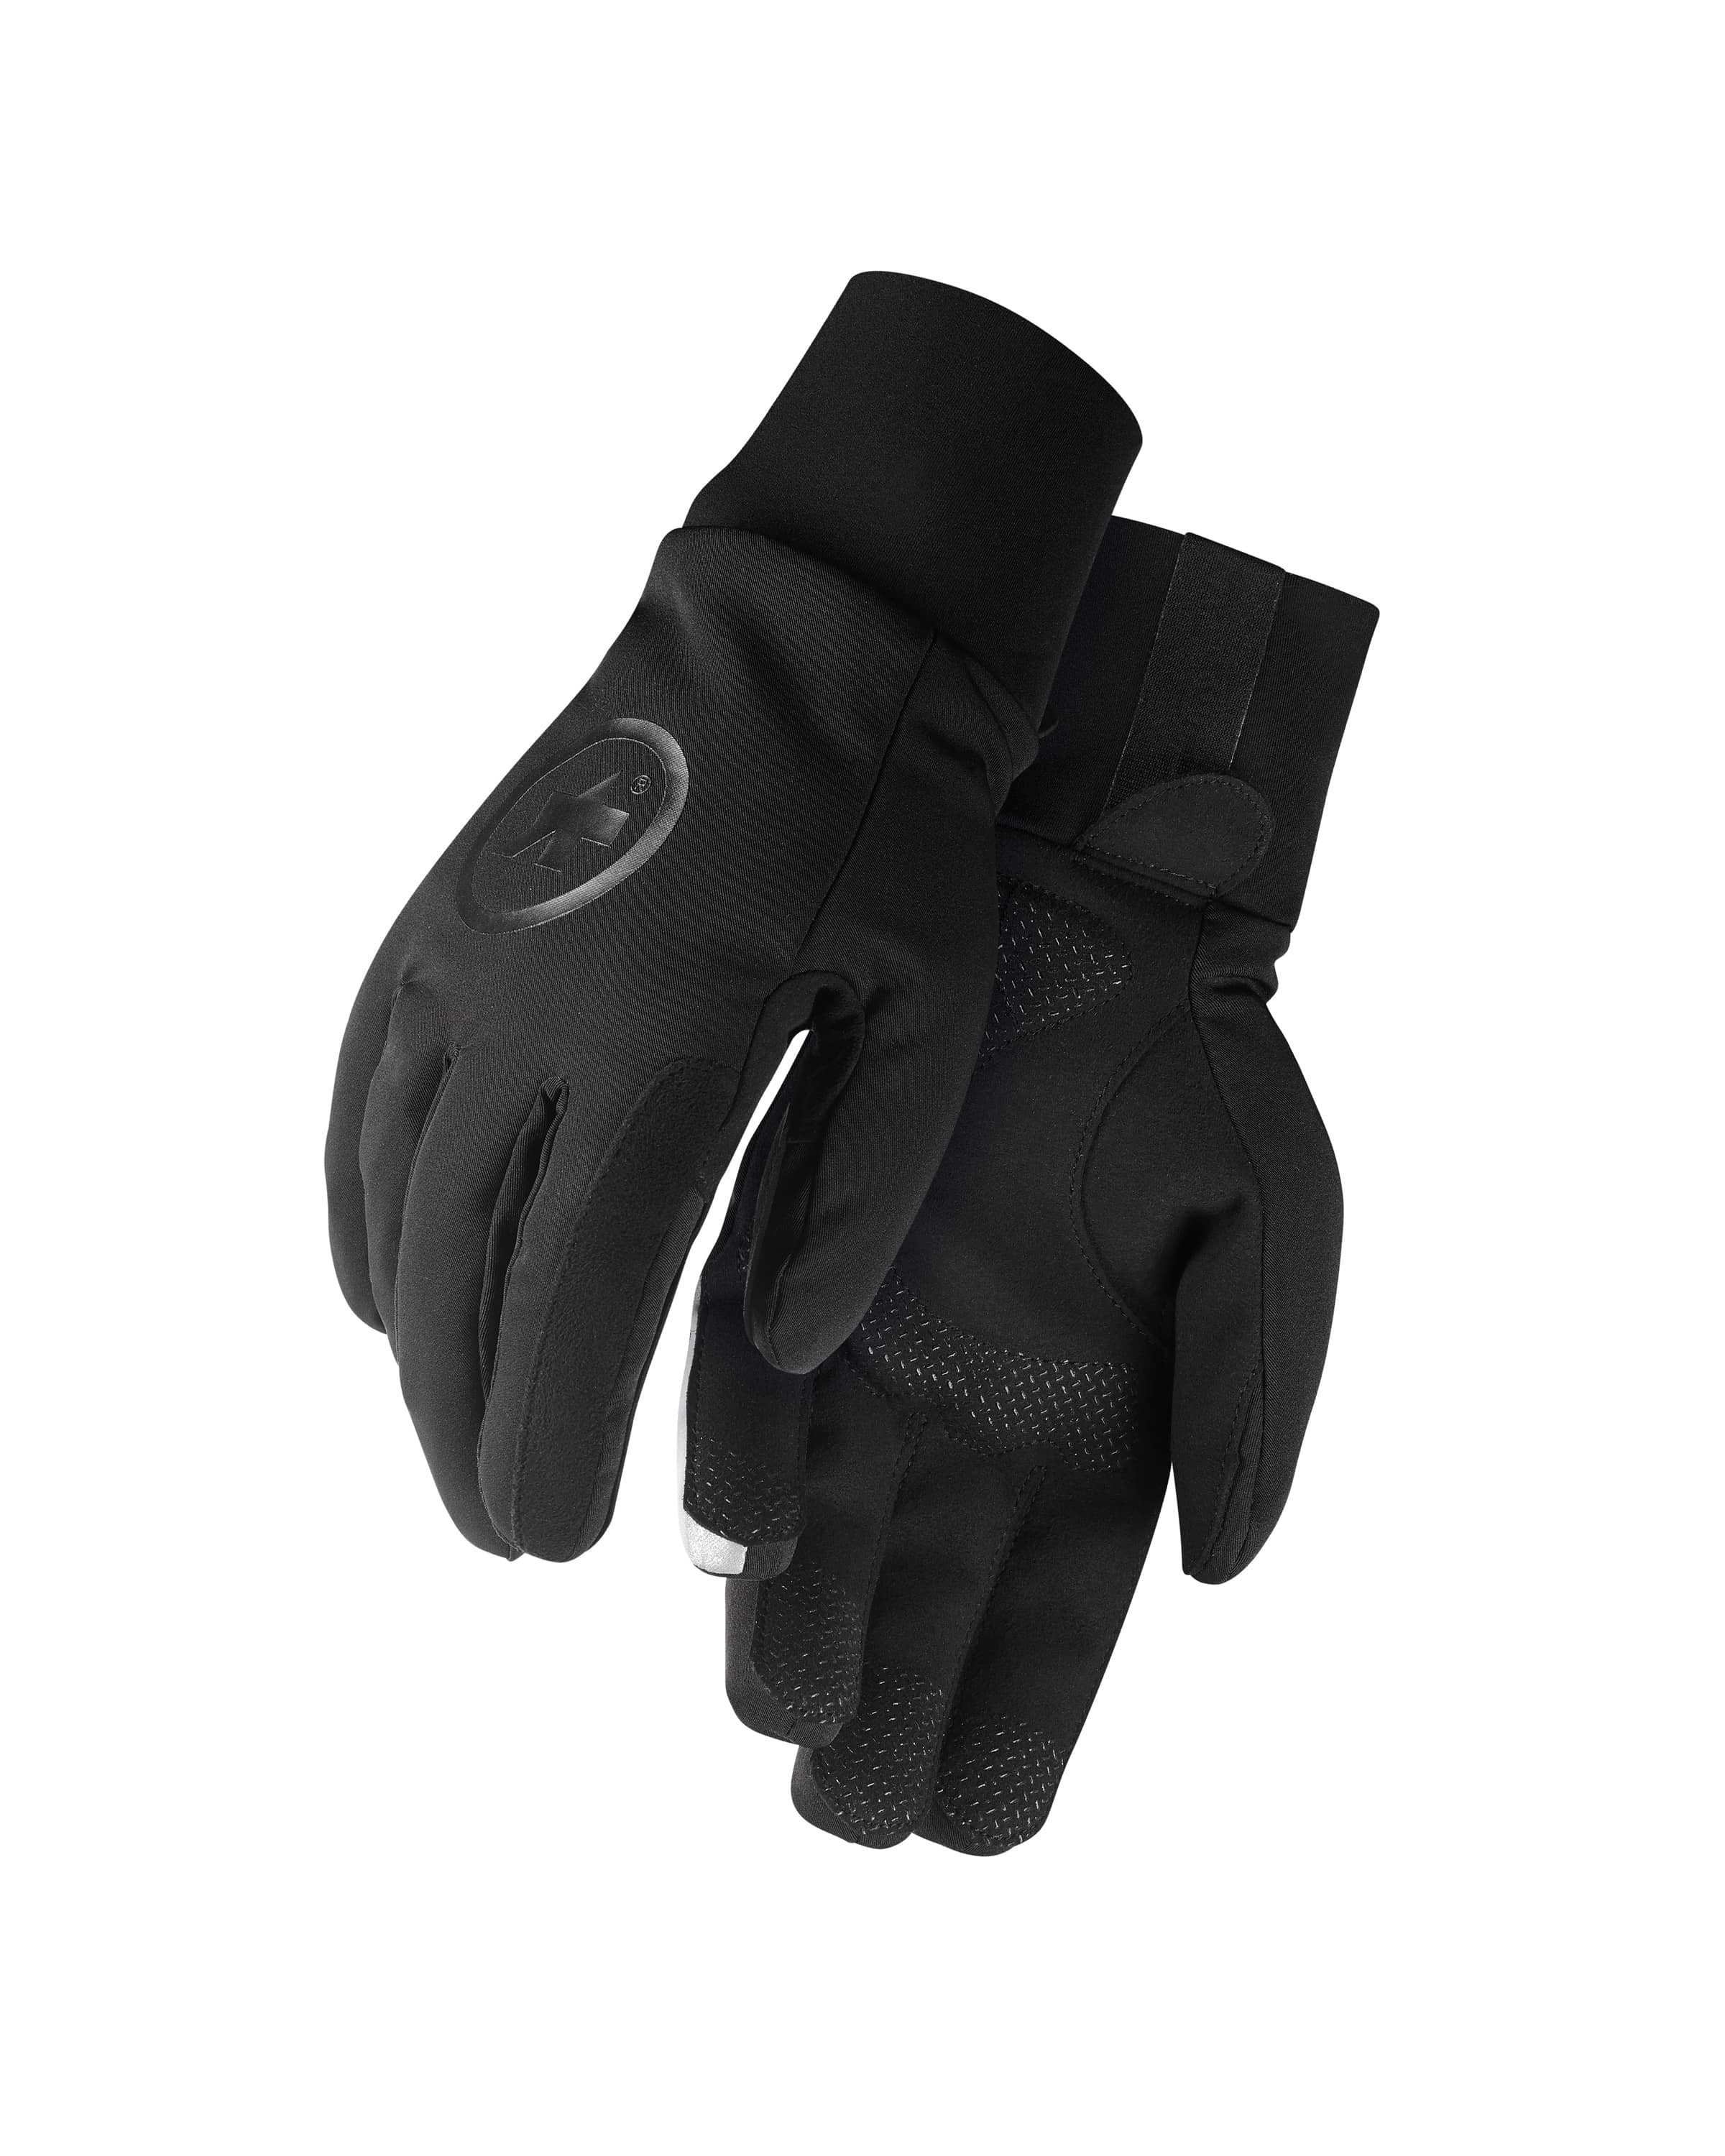 Assos ultraz winter gants de cyclisme blackseries noir